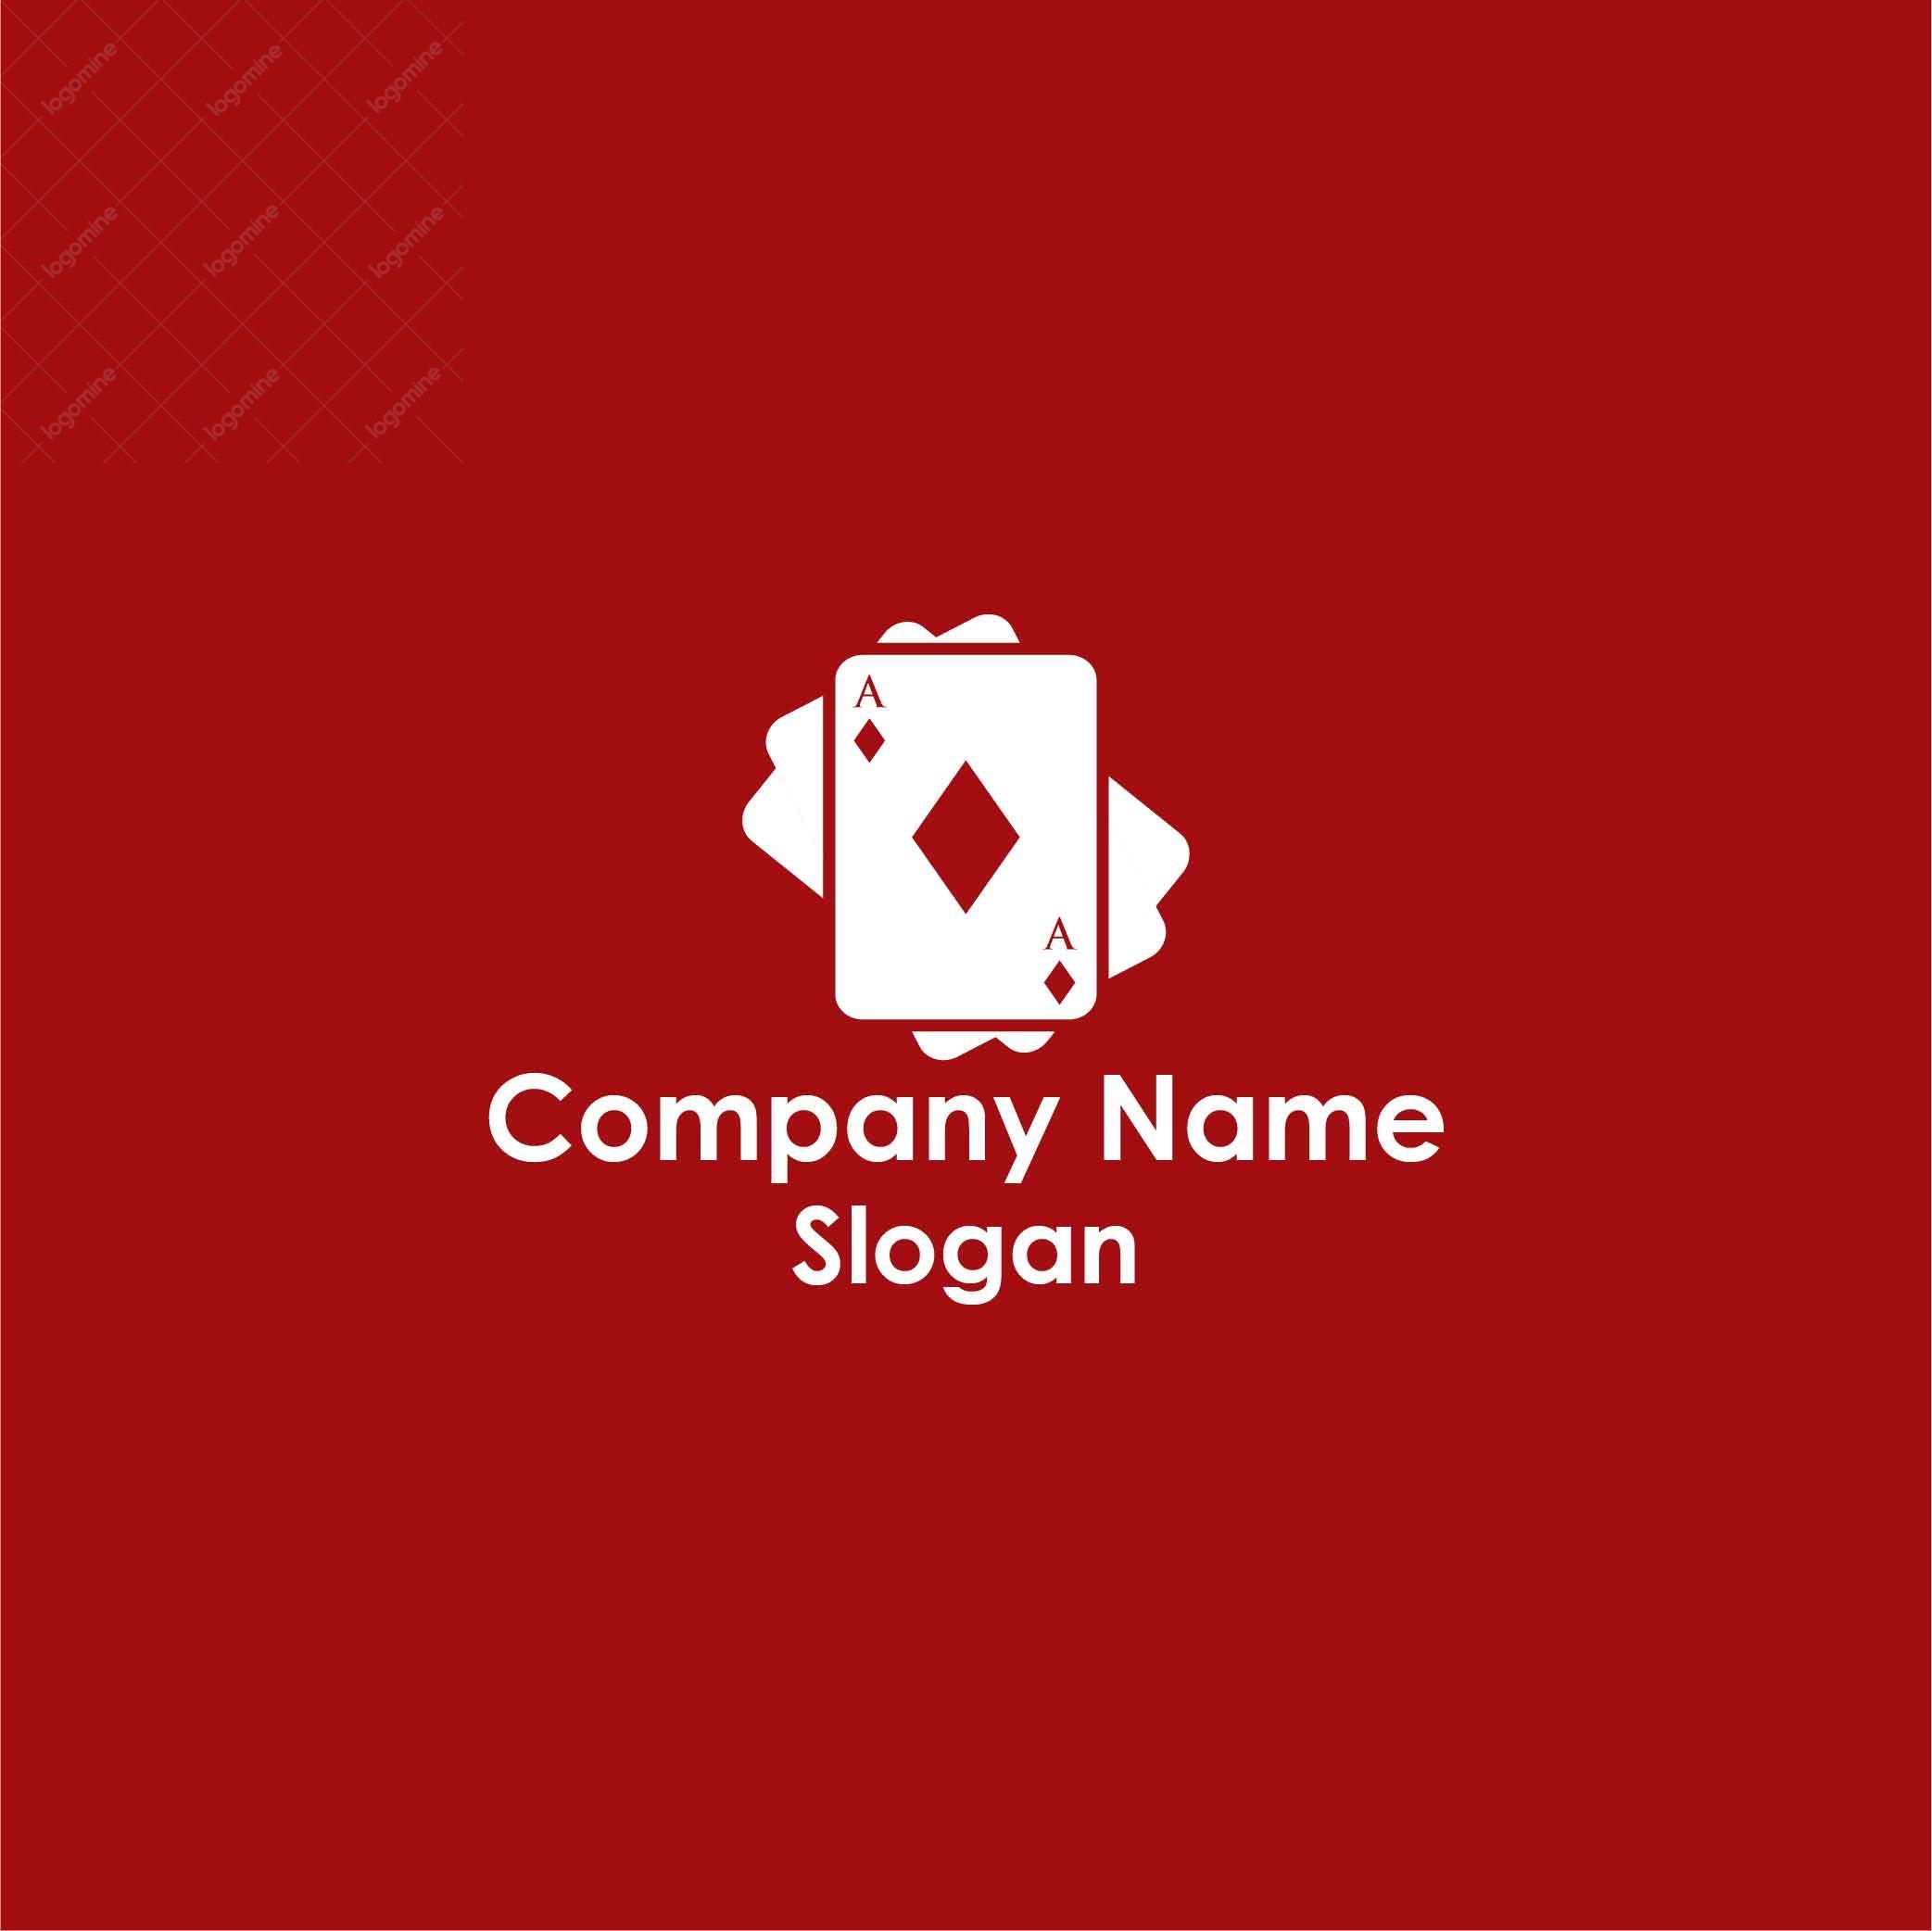 Gambling Logo - Games and Gambling Logo # 2 - Logo Mine - The Logo Design Company